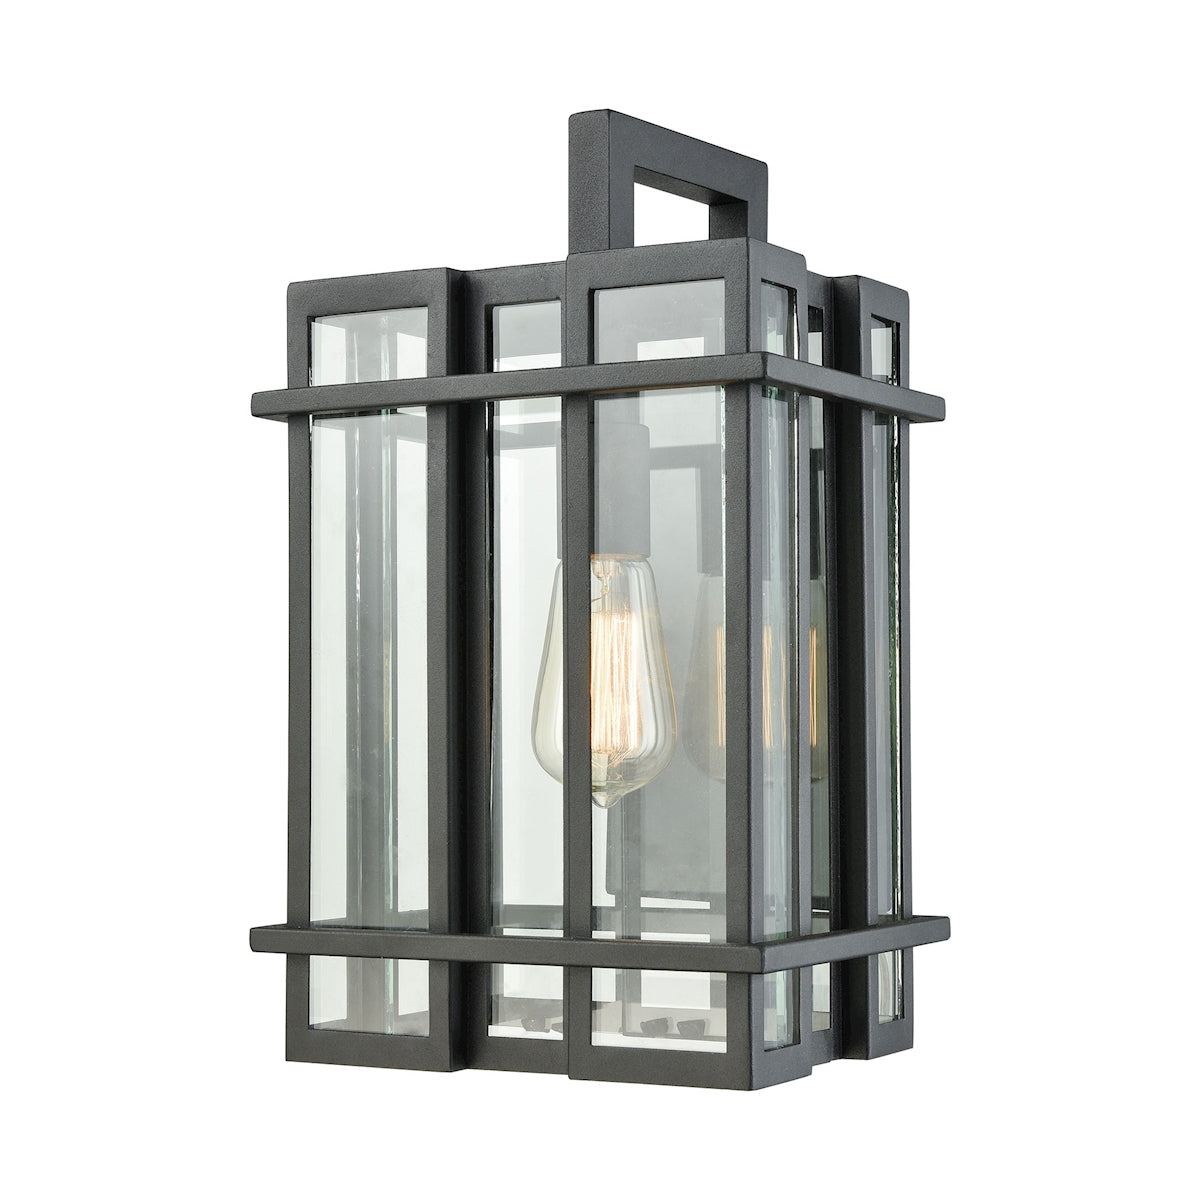 ELK Lighting 45315/1 Glass Tower 1-Light Outdoor Sconce in Matte Black